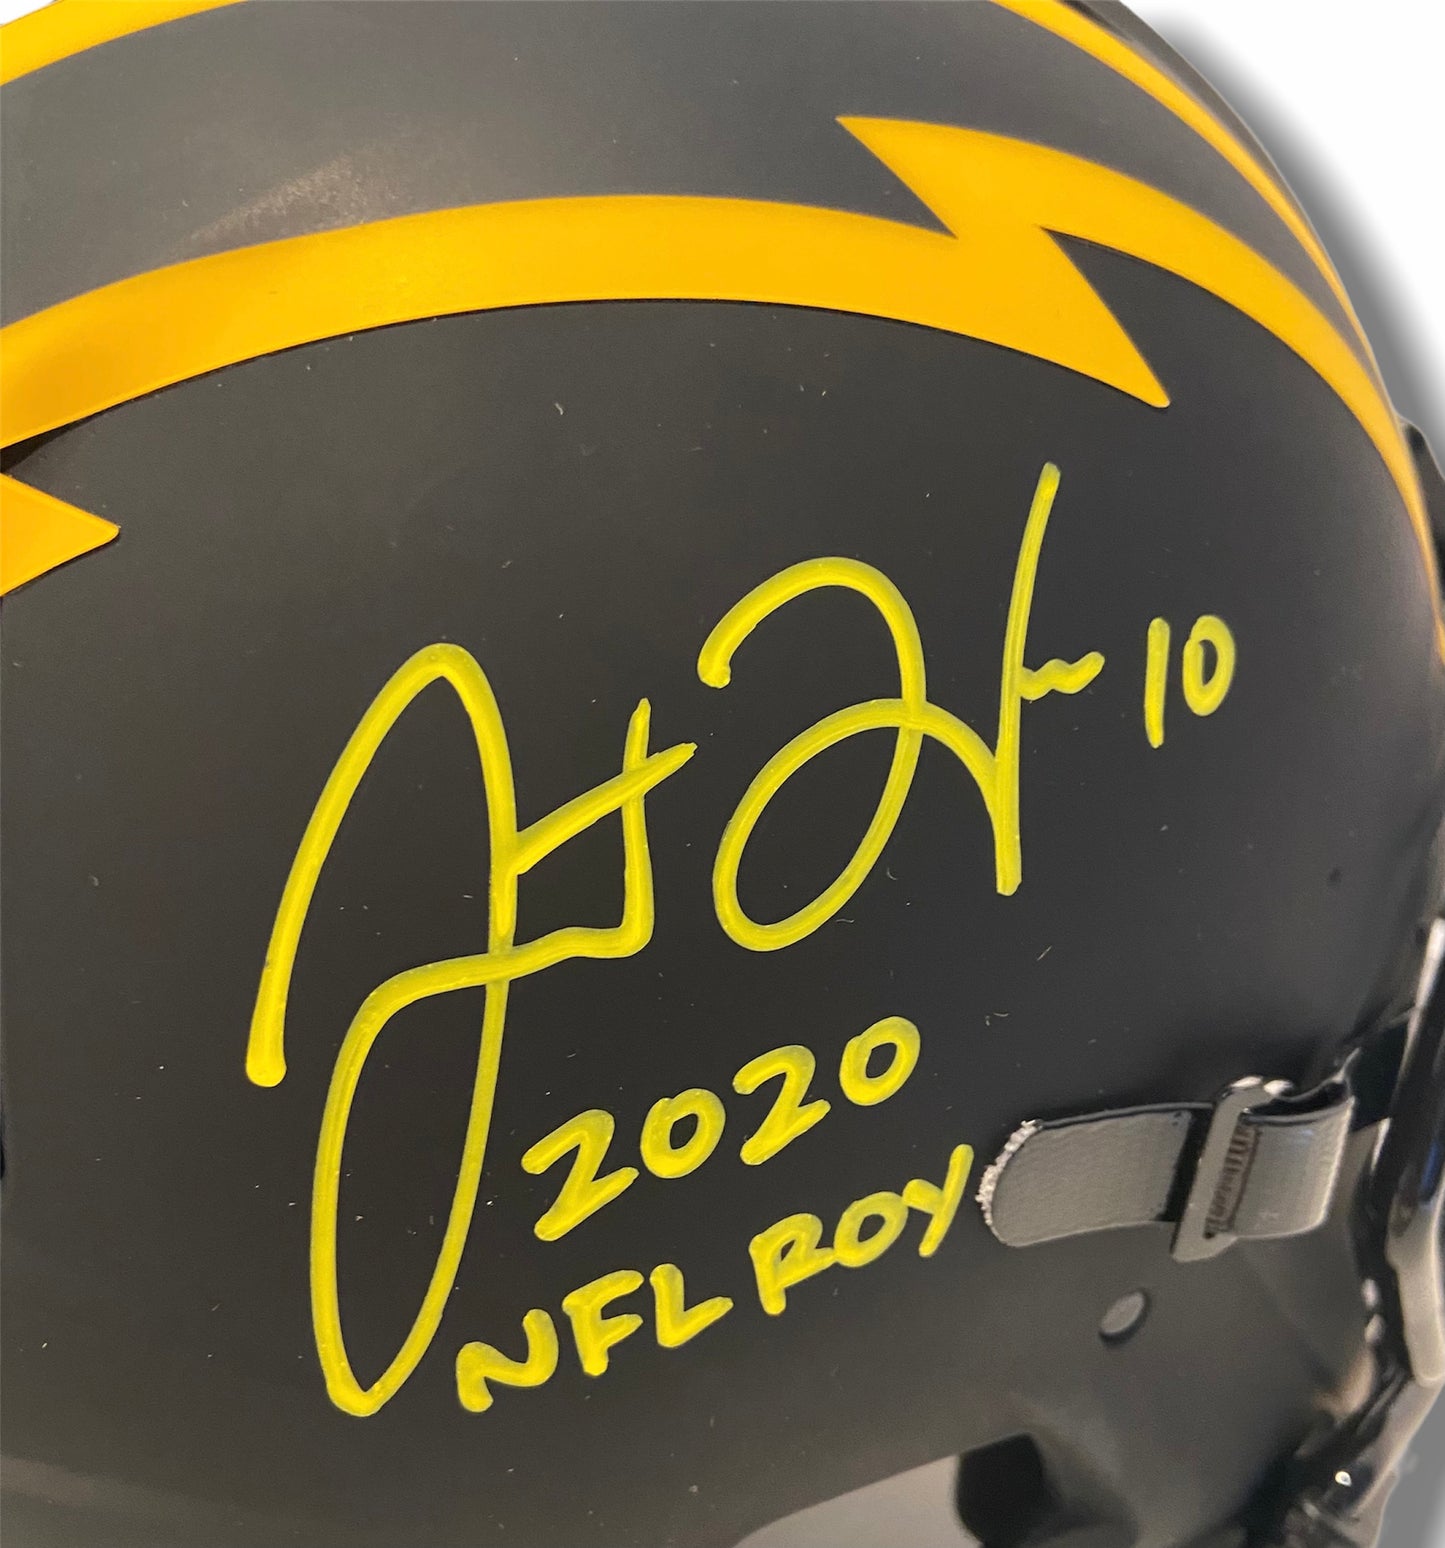 Justin Herbert Chargers Autographed Eclipse Authentic Helmet Beckett COA